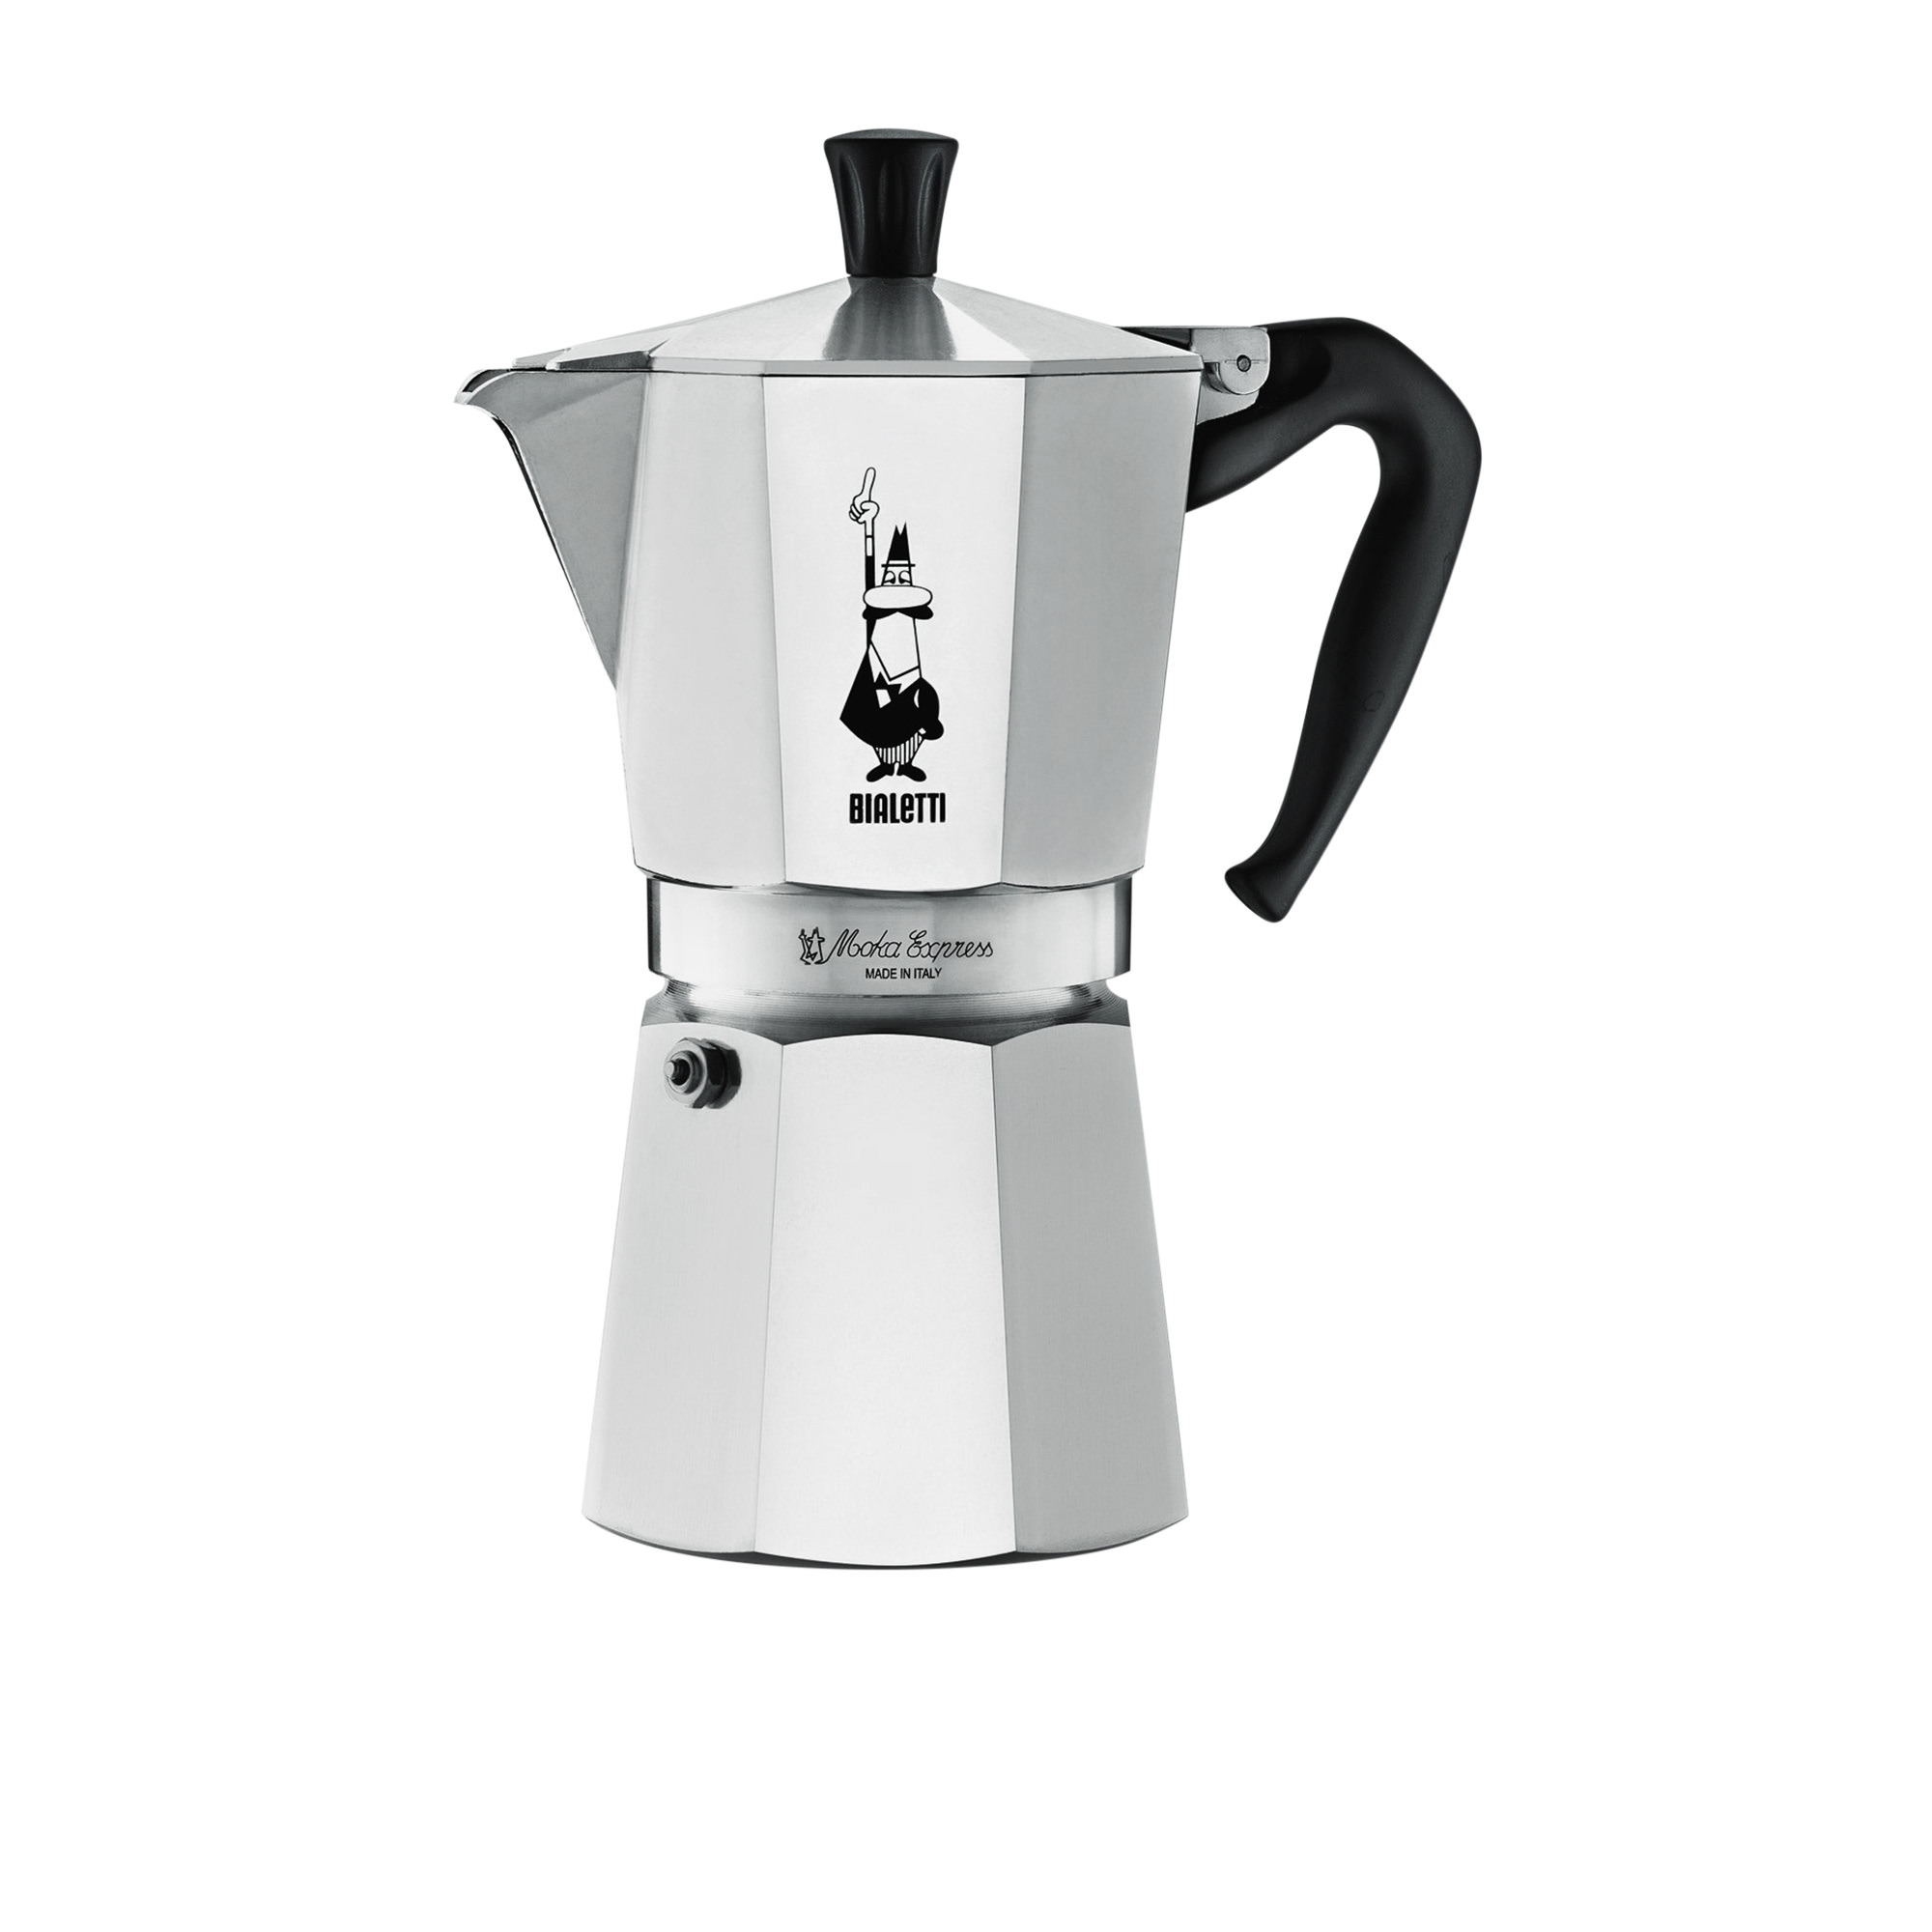 Bialetti Moka Express Stovetop Espresso Maker 9 Cup Image 1